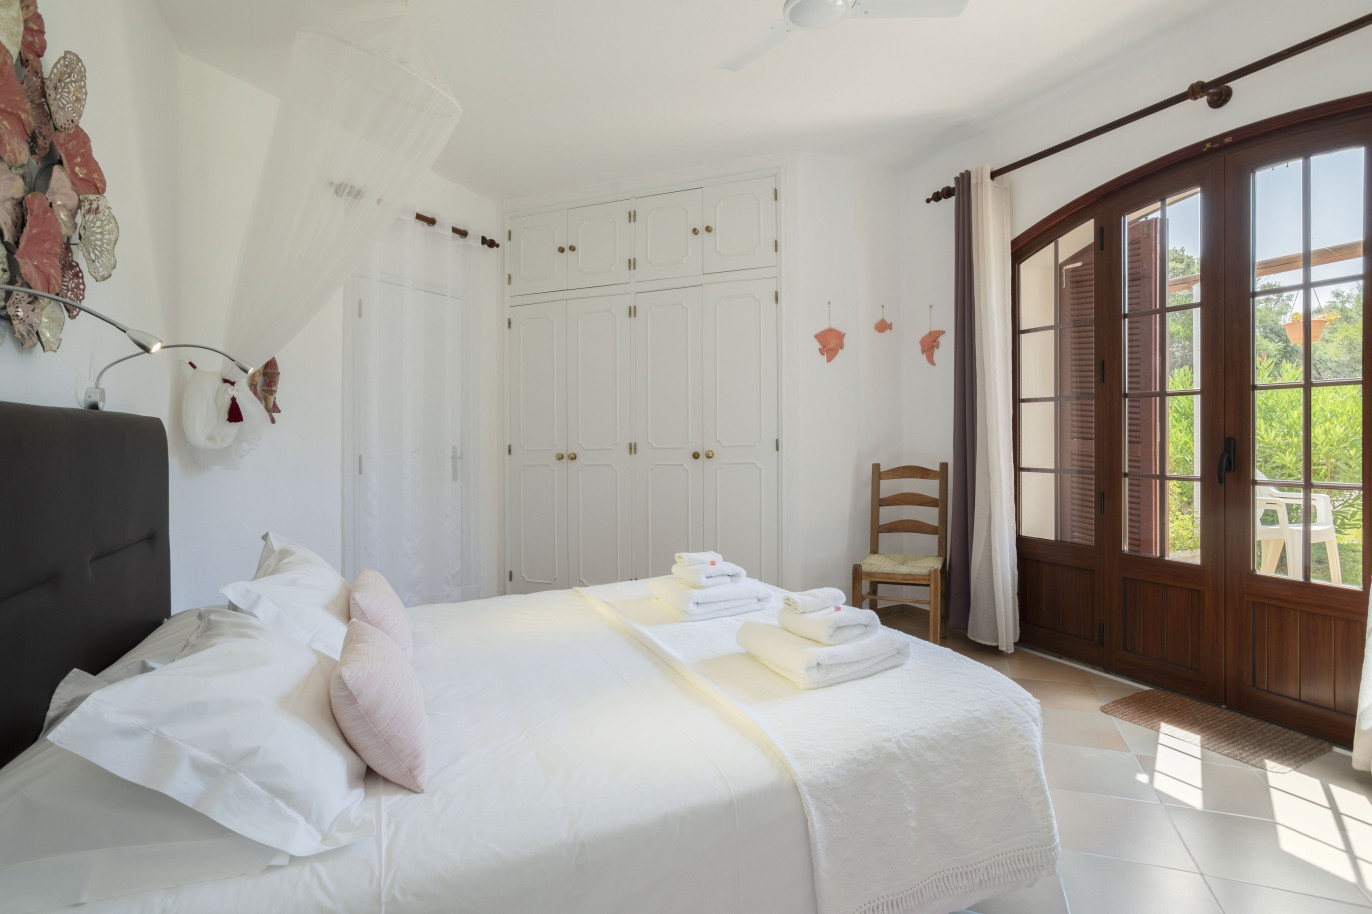 7 Bed Country Villa with swimming pool for sale in Estoi, Algarve_230964